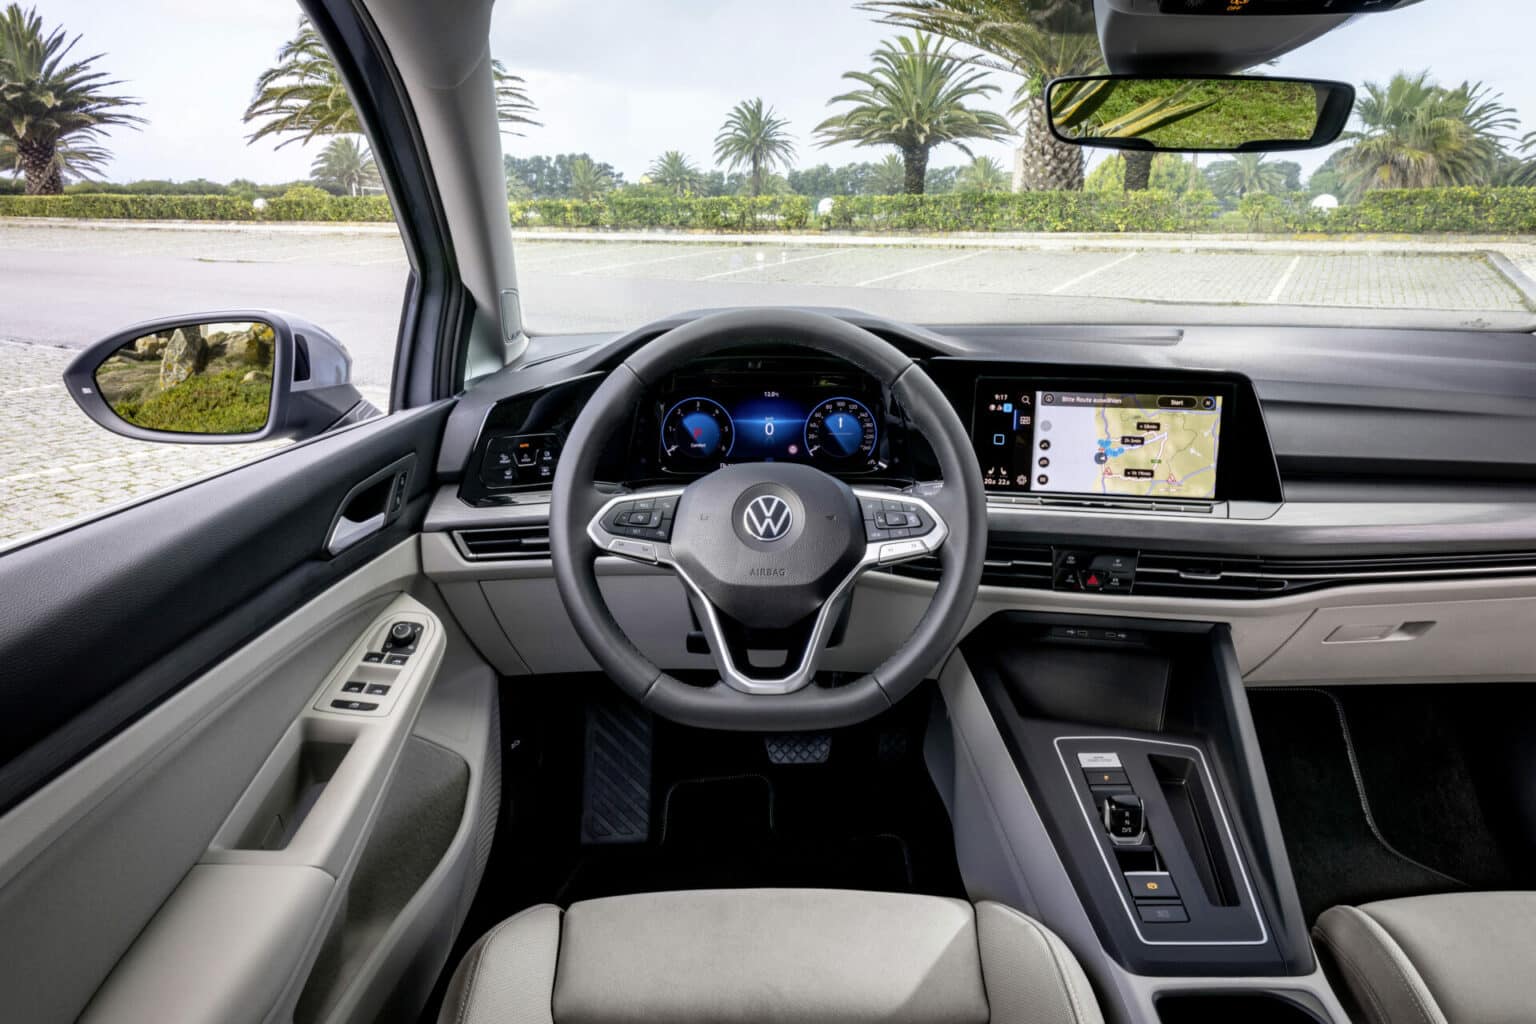 VW Golf 8 Cockpit